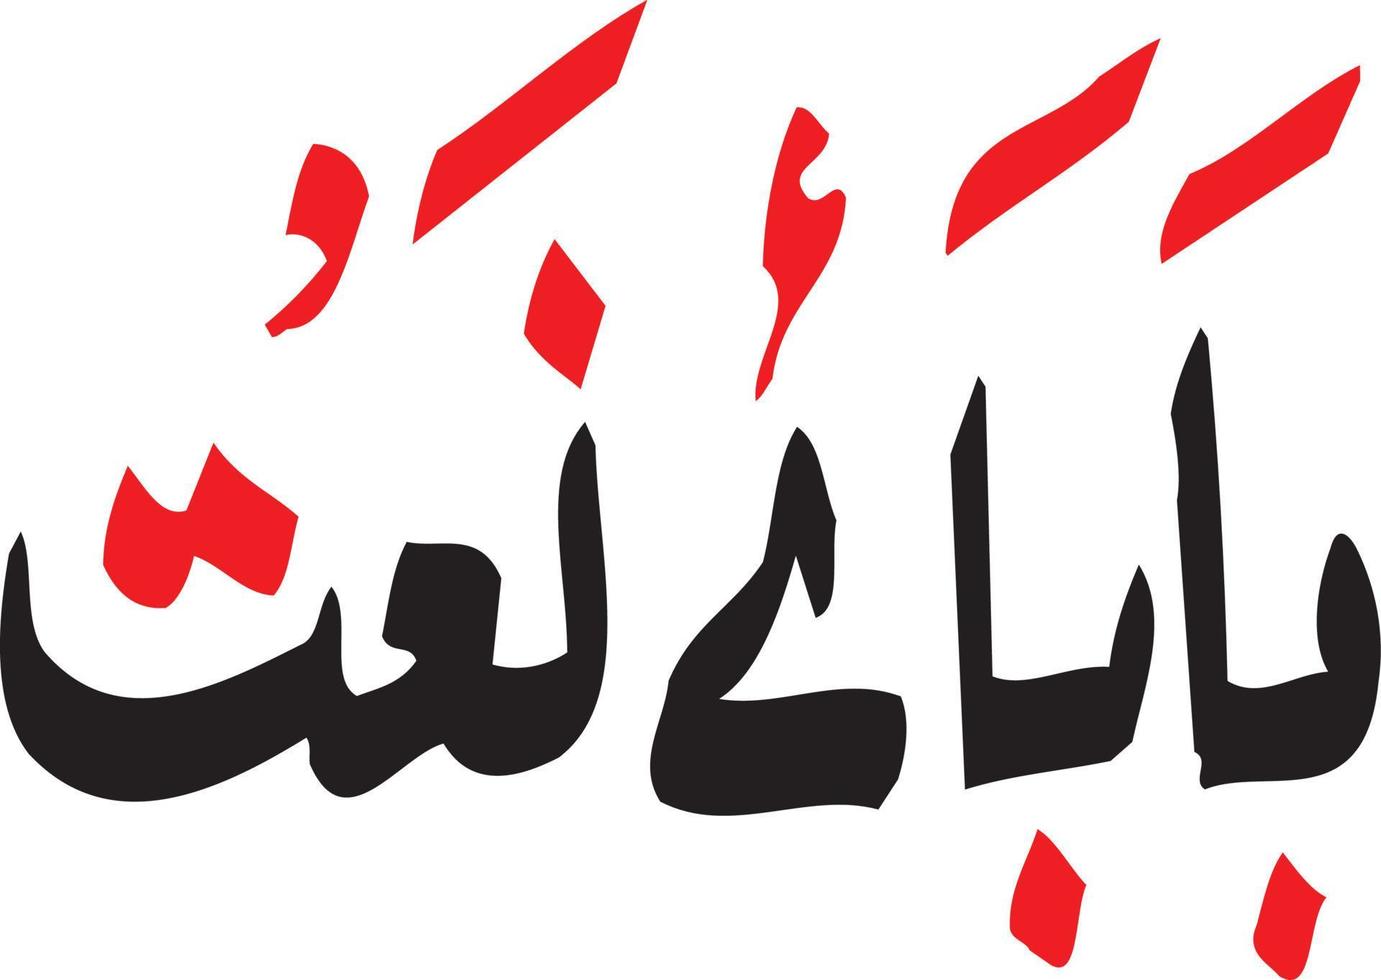 babaey naat título caligrafía árabe islámica vector libre